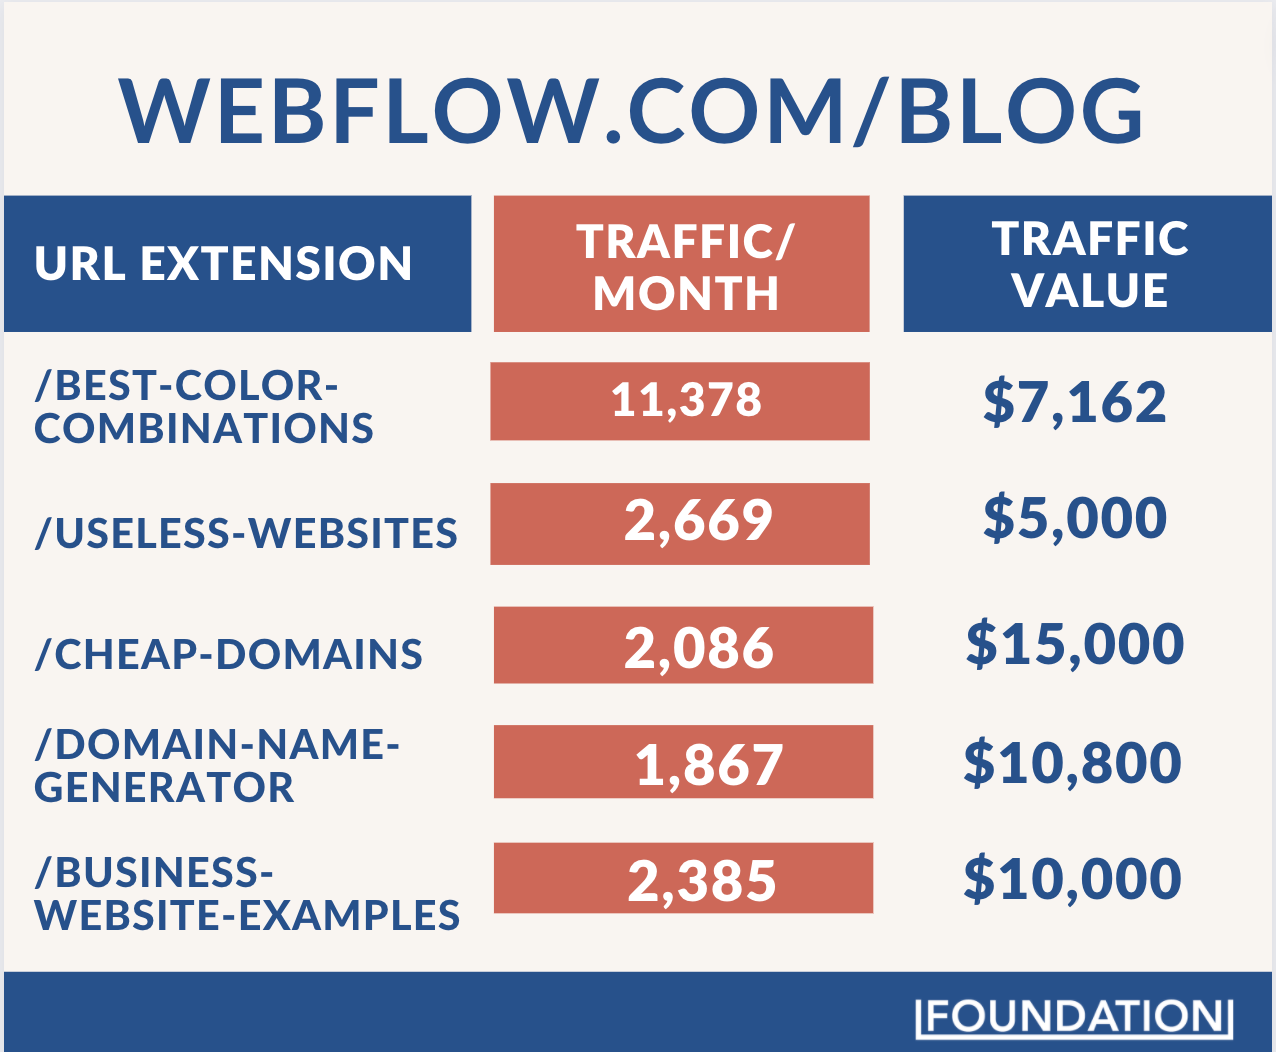 Webflow traffic value per blog url extension